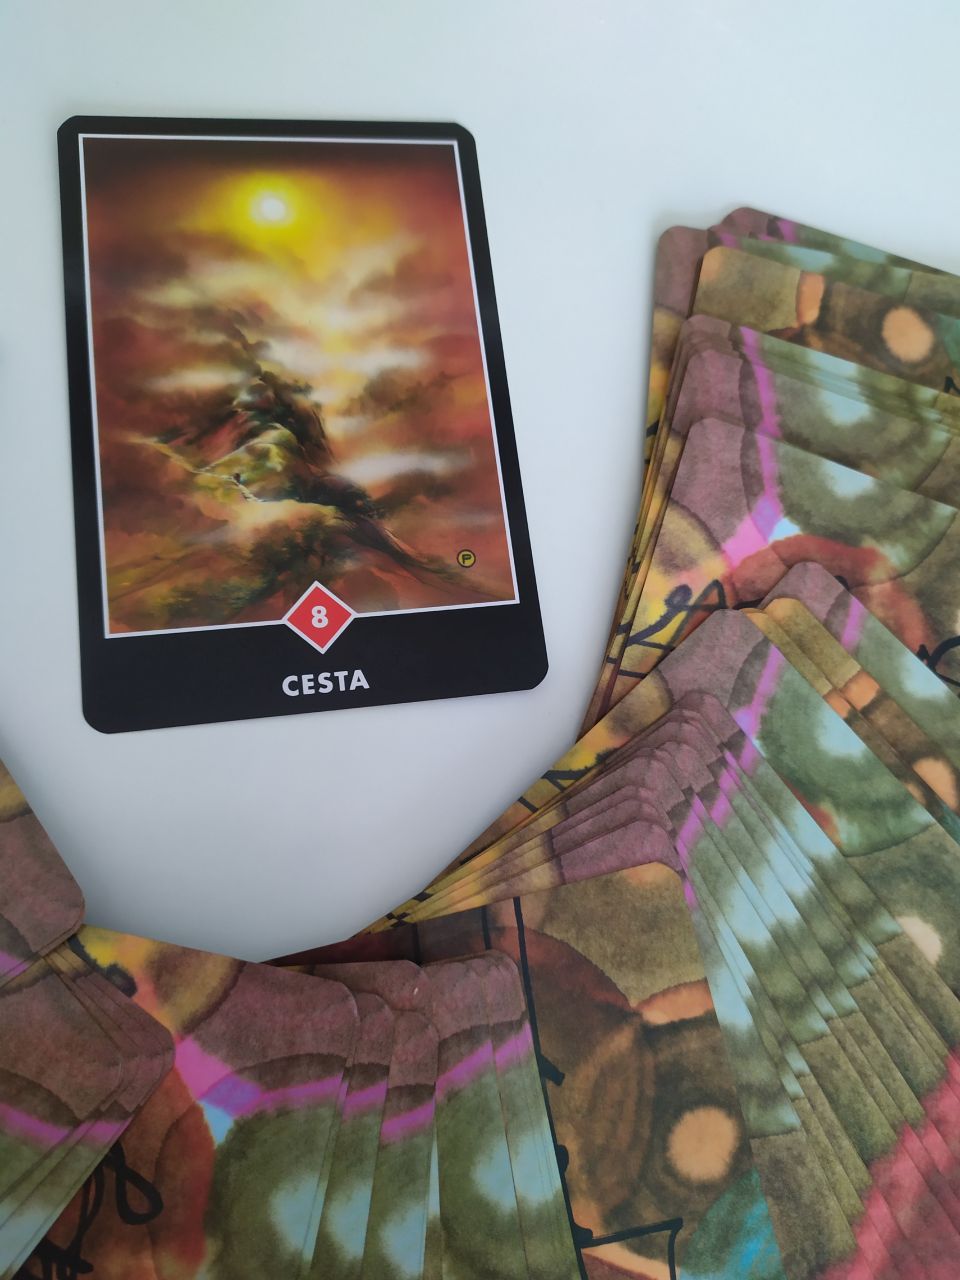 Tarotová karta Osho Zen Tarot s názvom Cesta